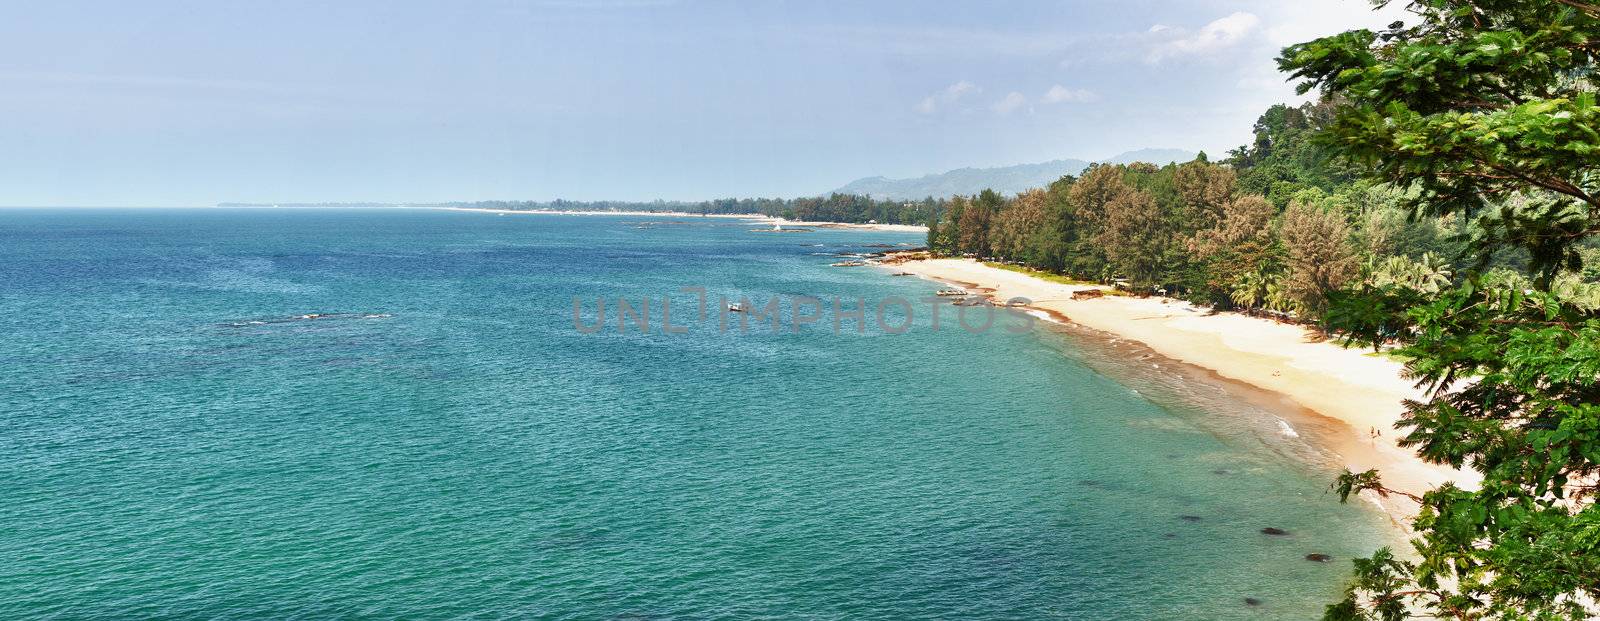 Panorama of tropical beach - Thailand, Phuket by pzaxe